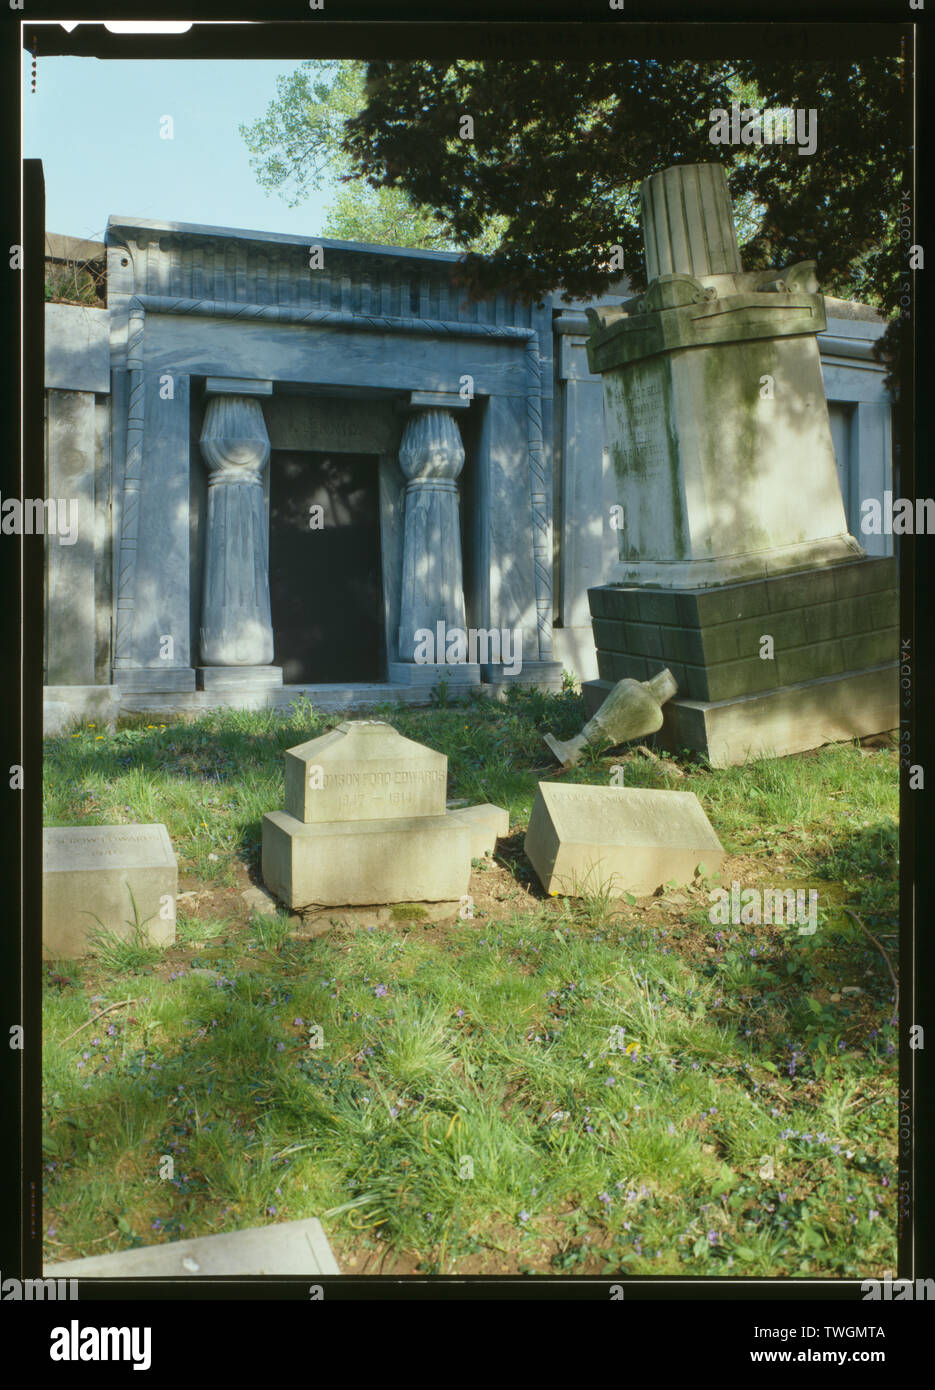 RIVER SECTION, FRANK LENNIG MAUSOLEUM (DUPLICATE OF HABS No. PA-1811-28) - Laurel Hill Cemetery, 3822 Ridge Avenue, Philadelphia, Philadelphia County, PA Stock Photo